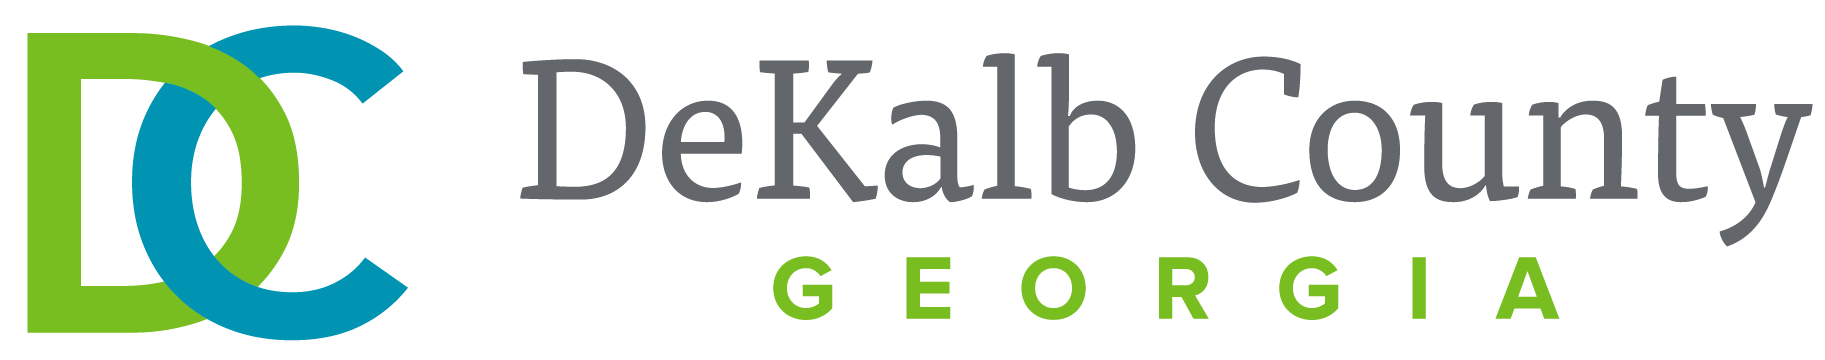 DeKalb County Law Department logo